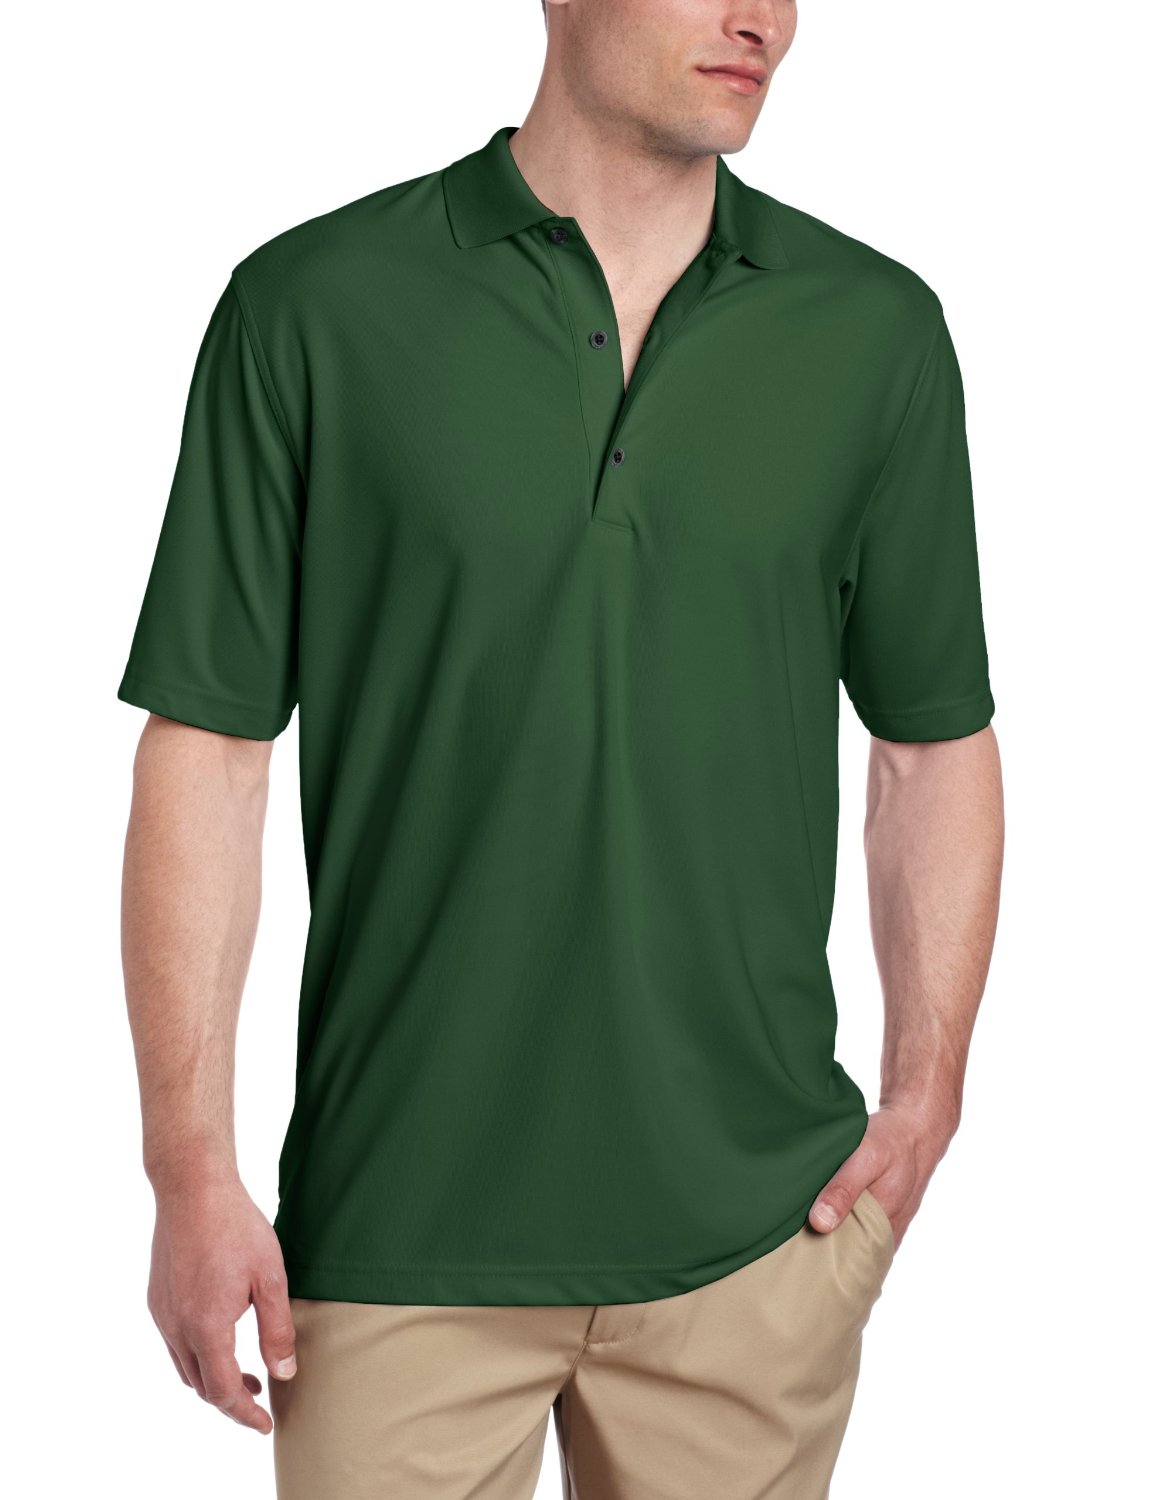 Mens ProTek Micro Pique Short Sleeve Golf Polo Shirts